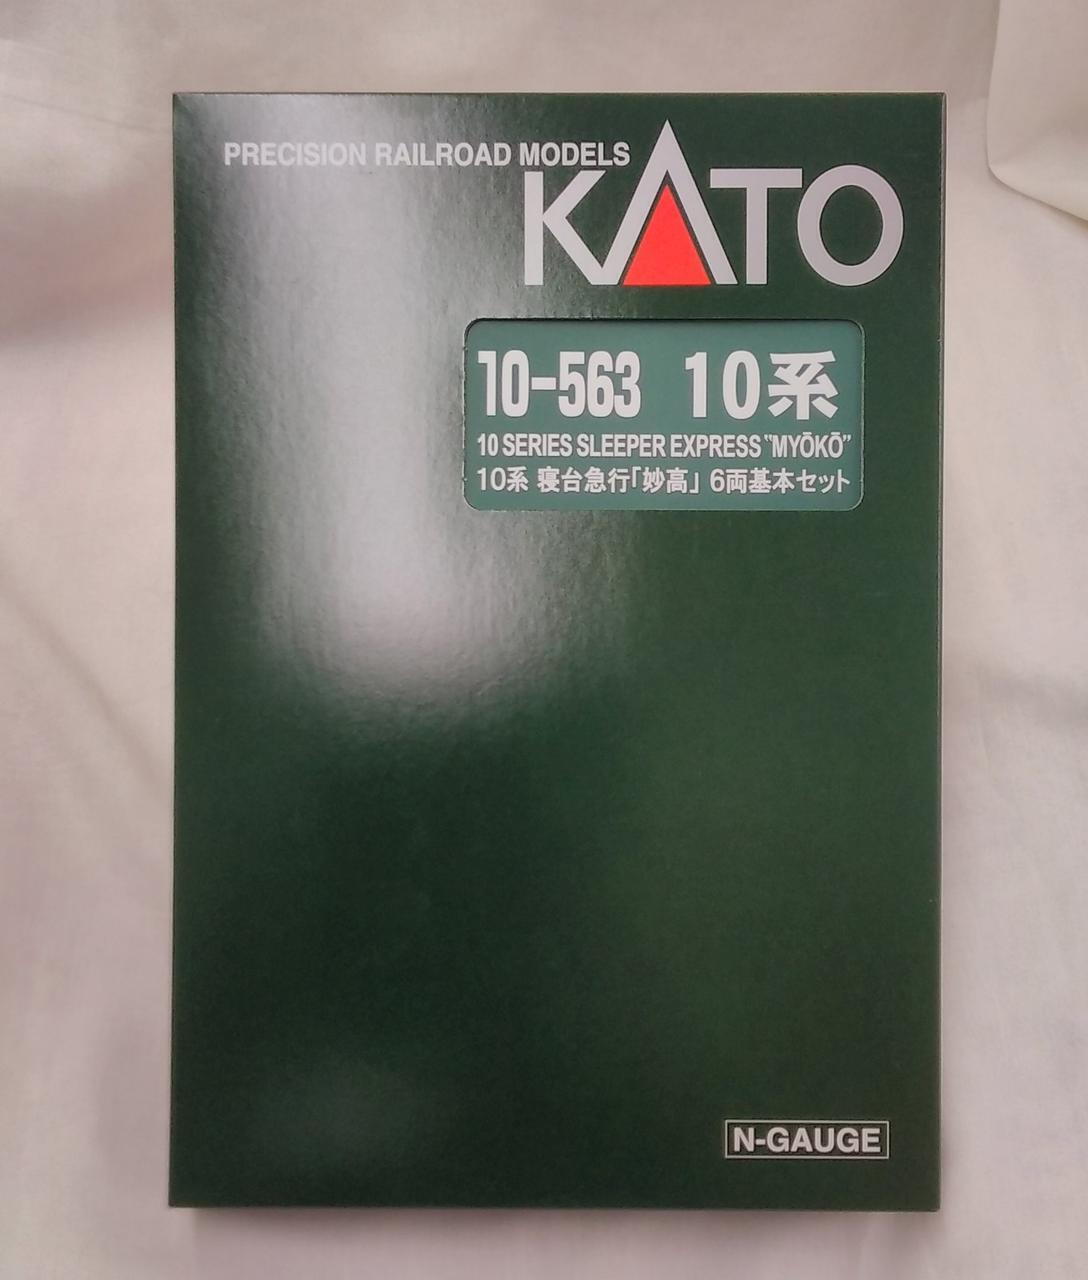 Kato 10-563 10-564 10 Series Sleeper Express Myoko Basic Extension Set